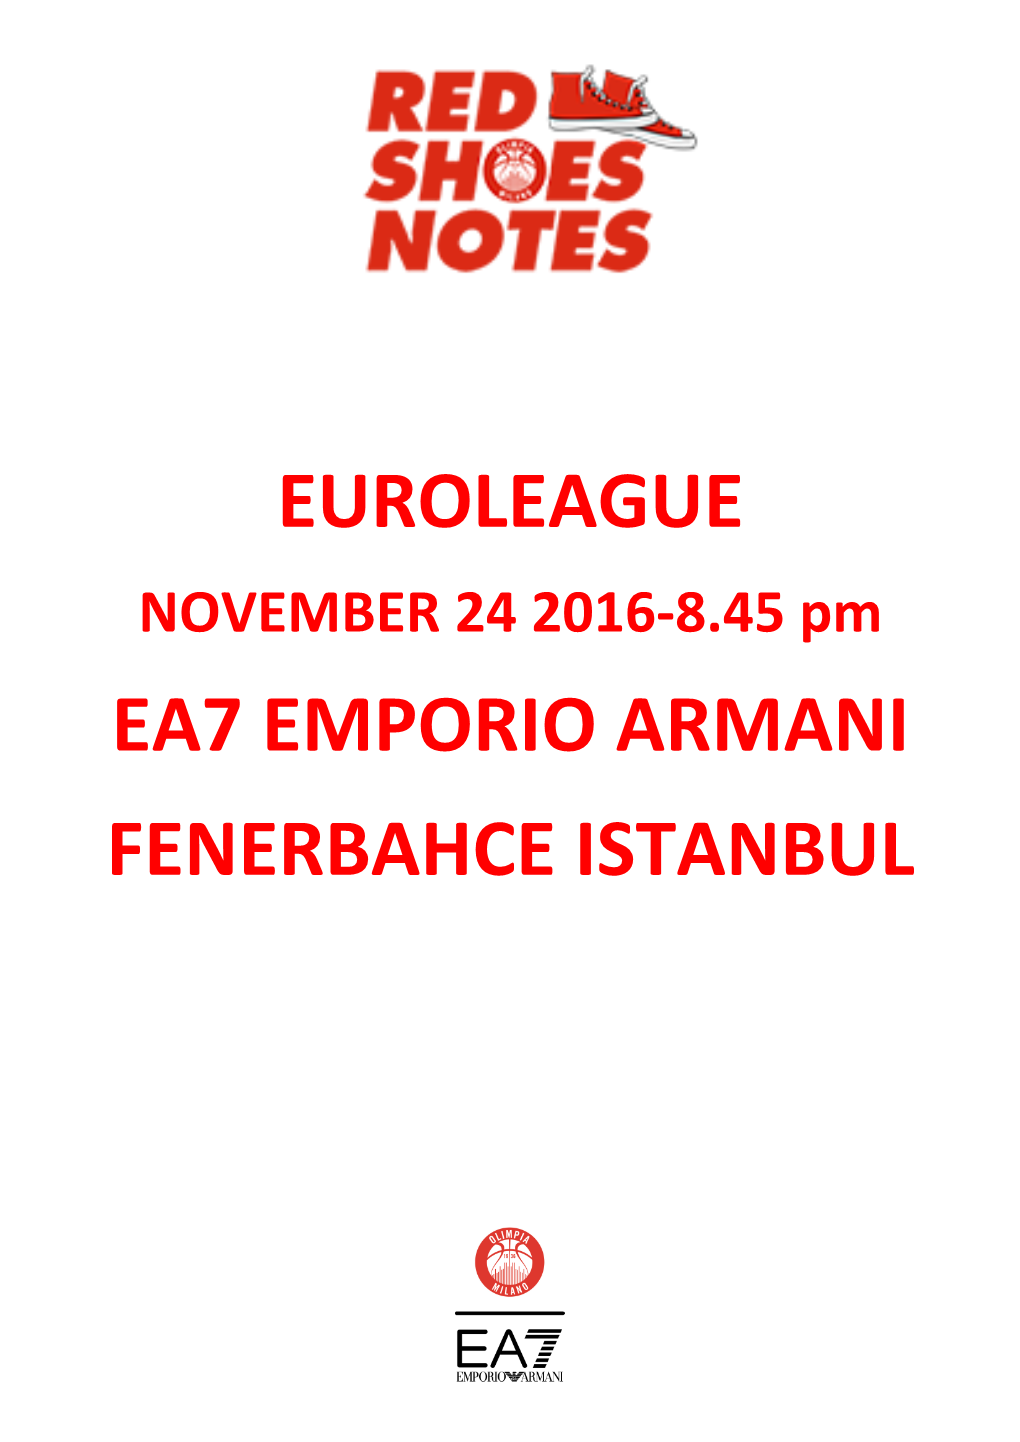 Euroleague Ea7 Emporio Armani Fenerbahce Istanbul